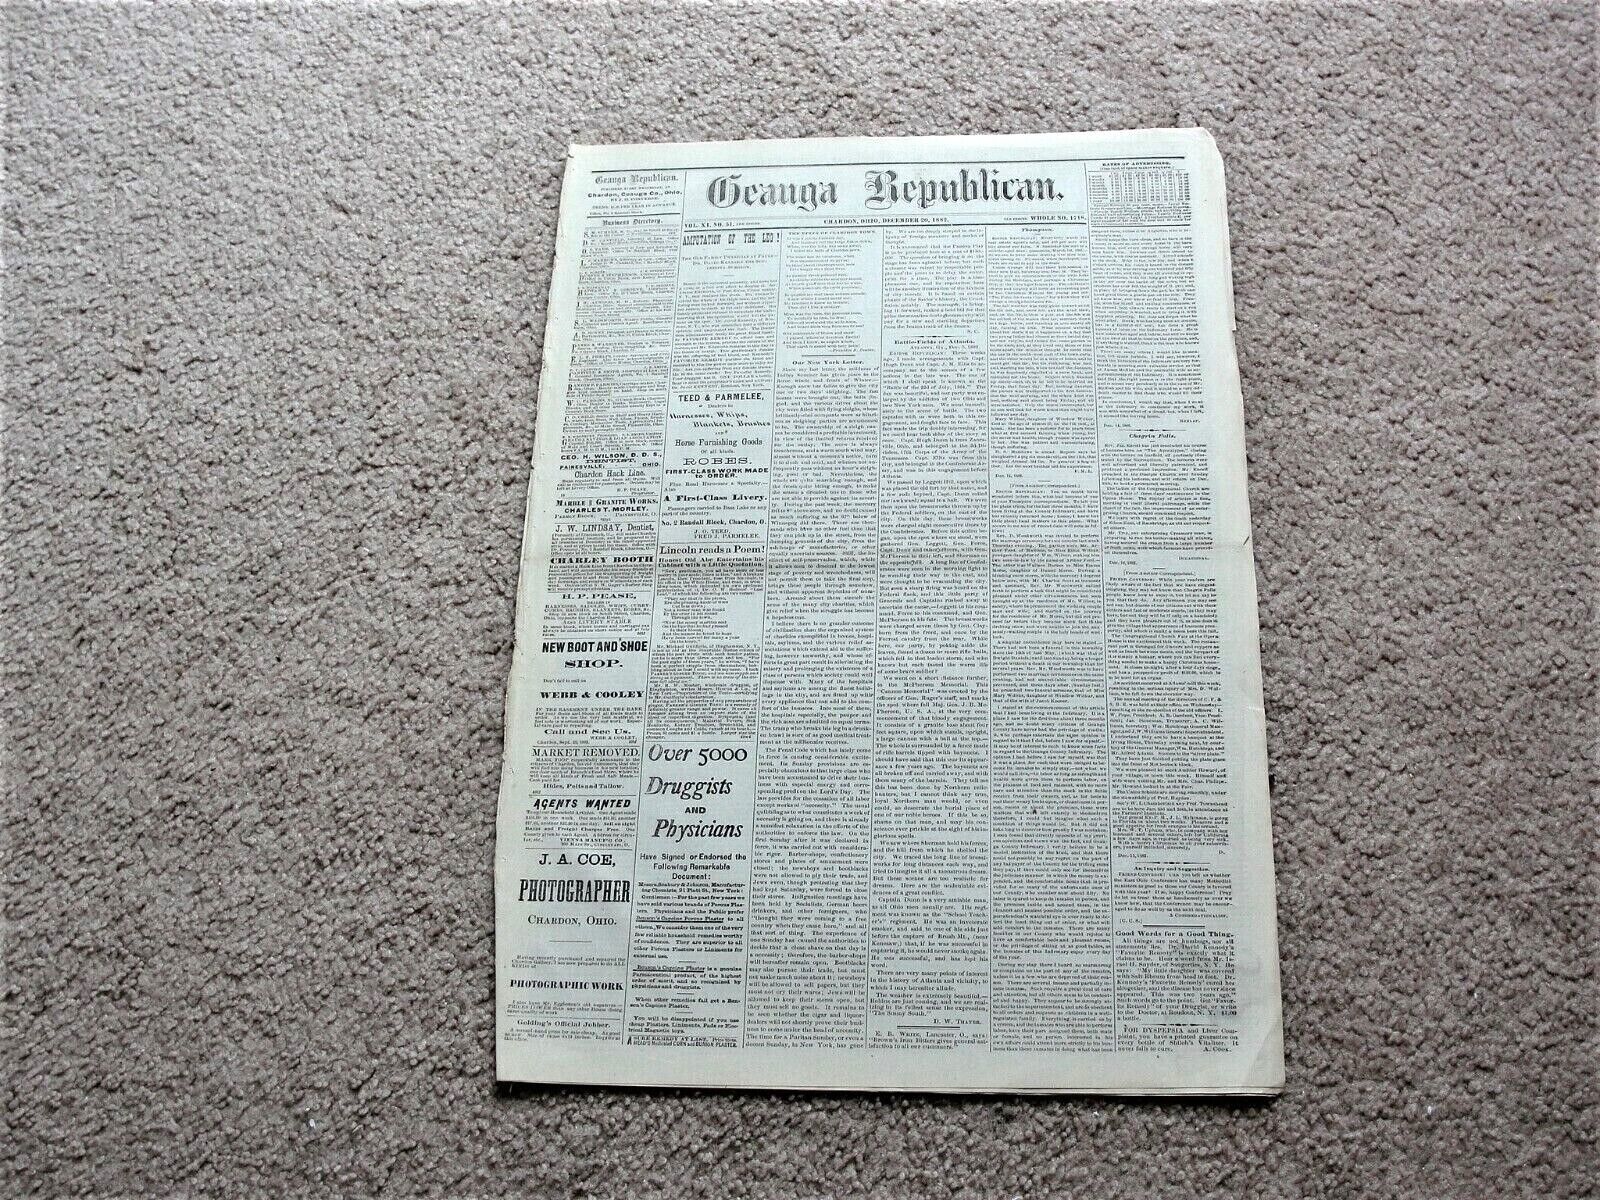 Geauga Republican, Wednesday, December 20, 1882- Chardon, Ohio Newspaper. 